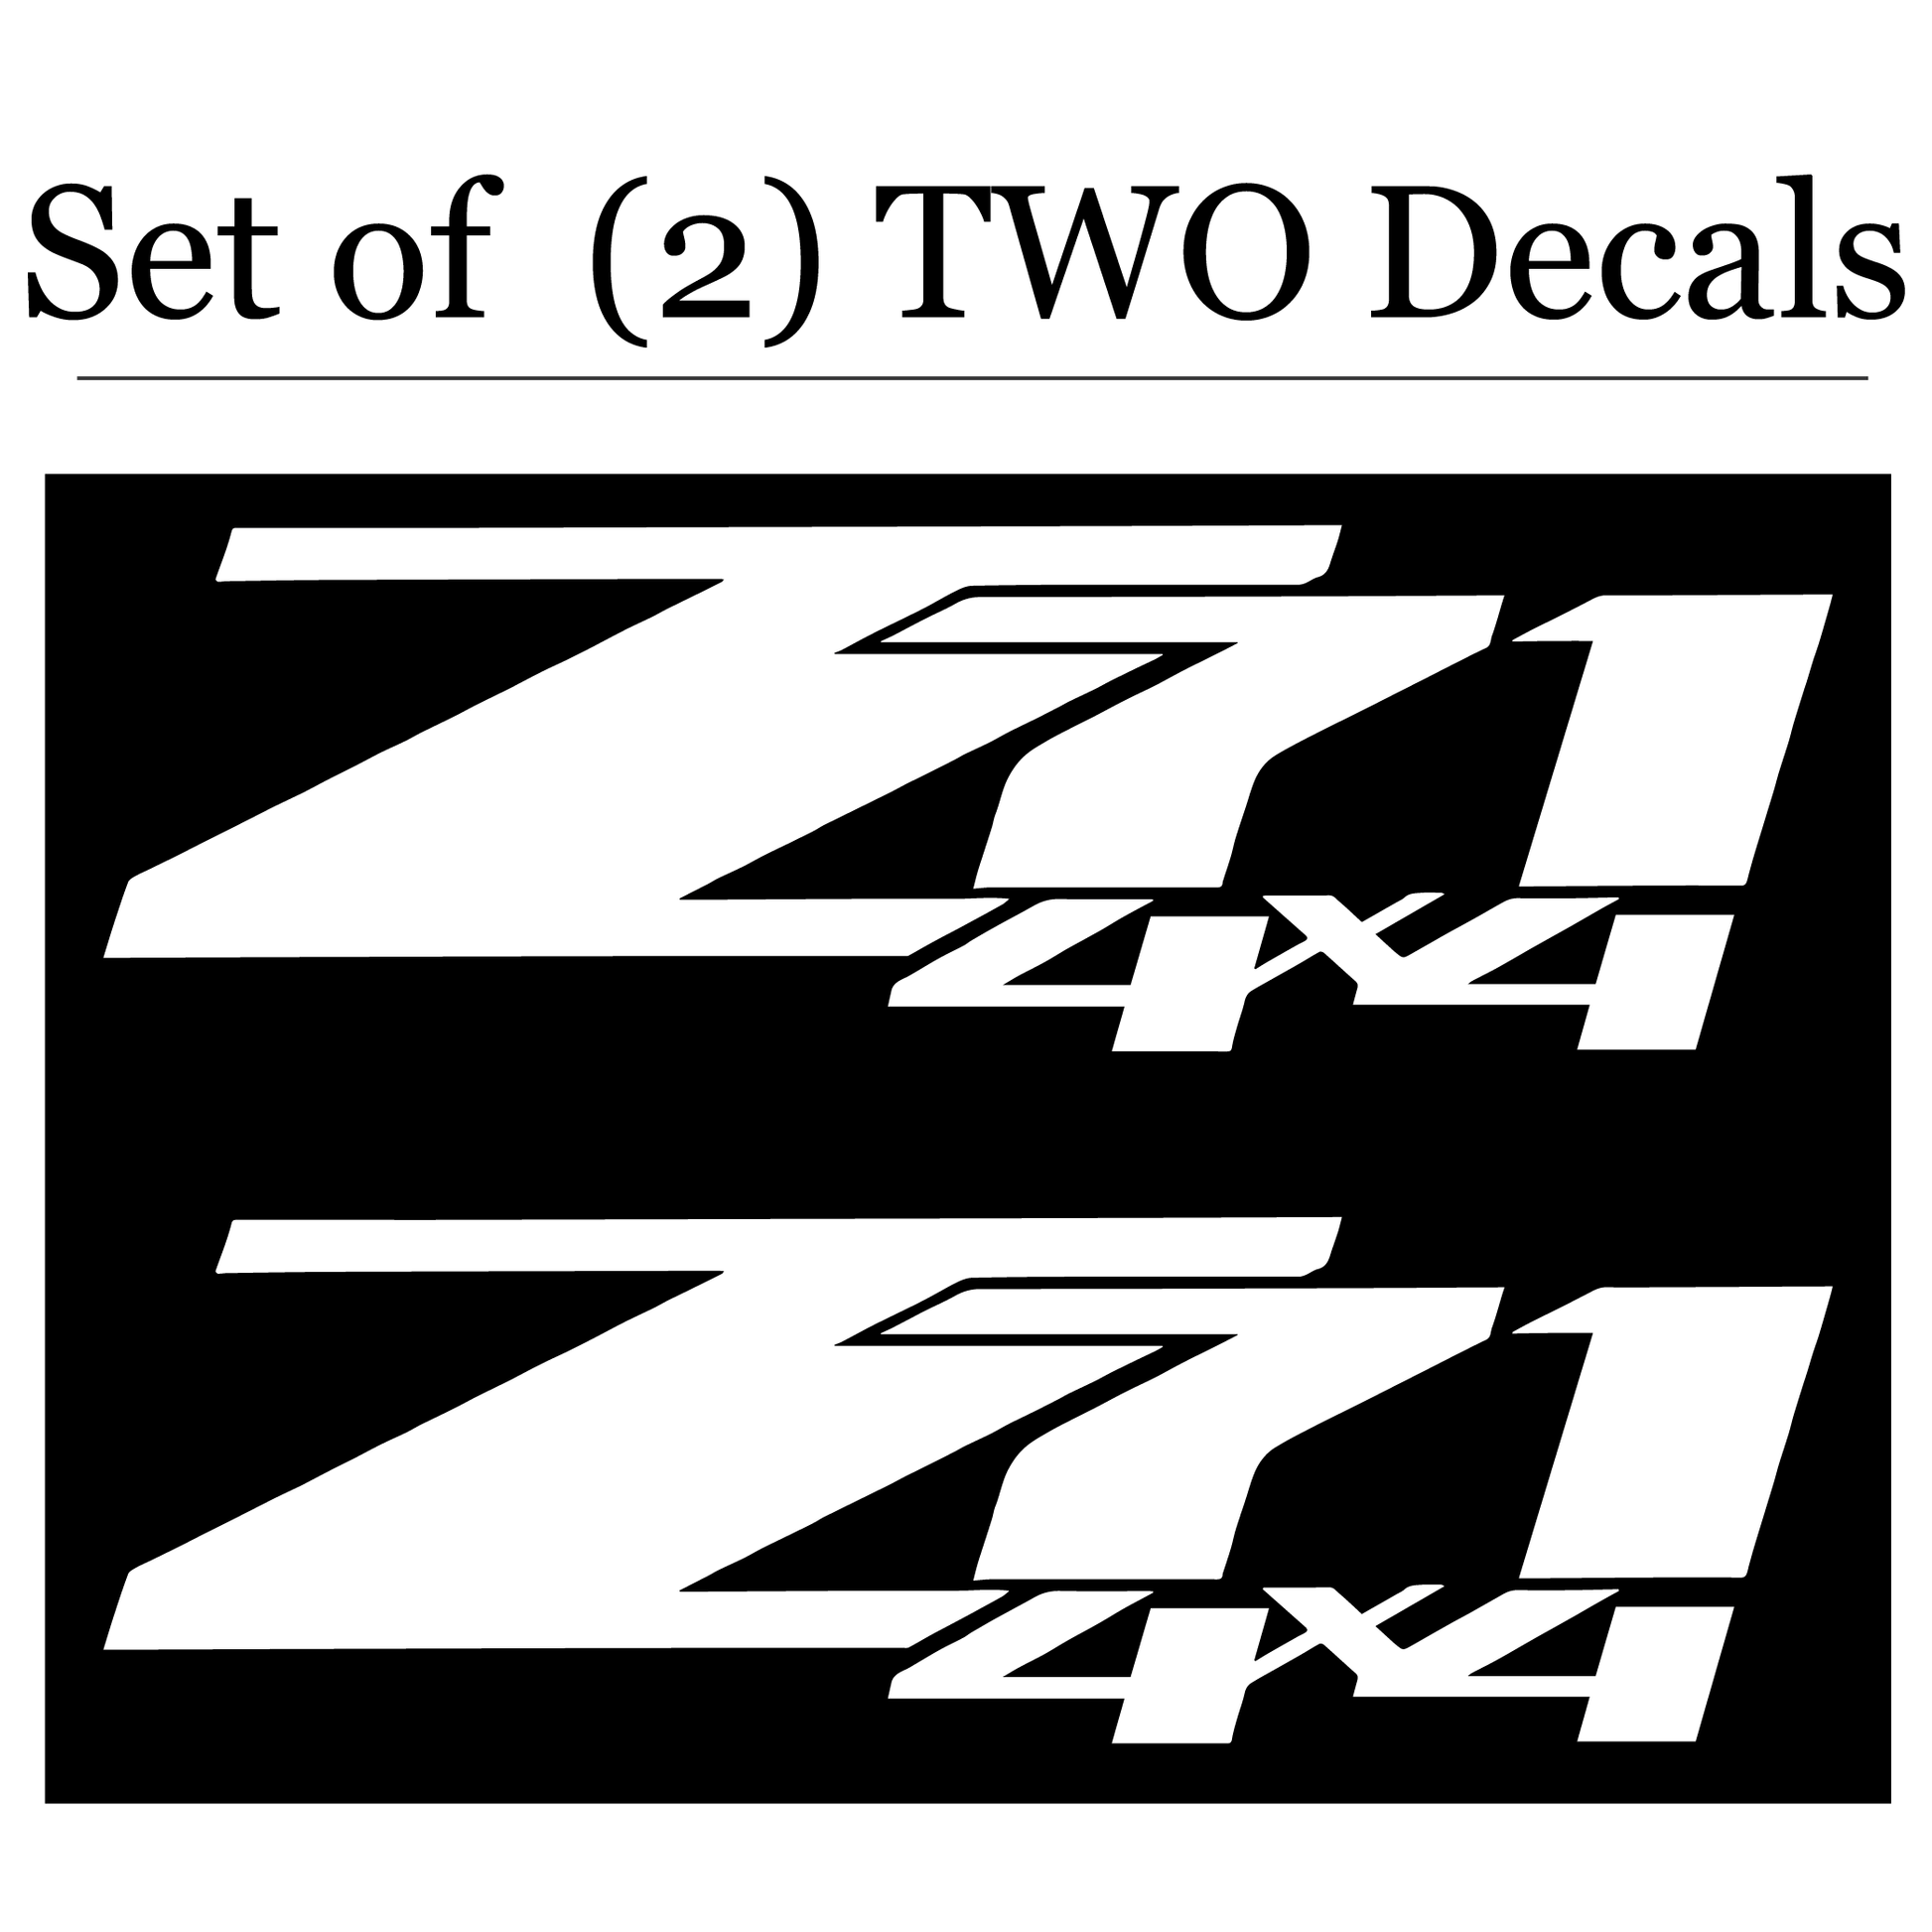 Shop Vinyl Design Silverado Z71 Trucks 4 x 4 Replacement Bedside Decals Vehicle Vinyl Graphic Decal Shop Vinyl Design decals stickers